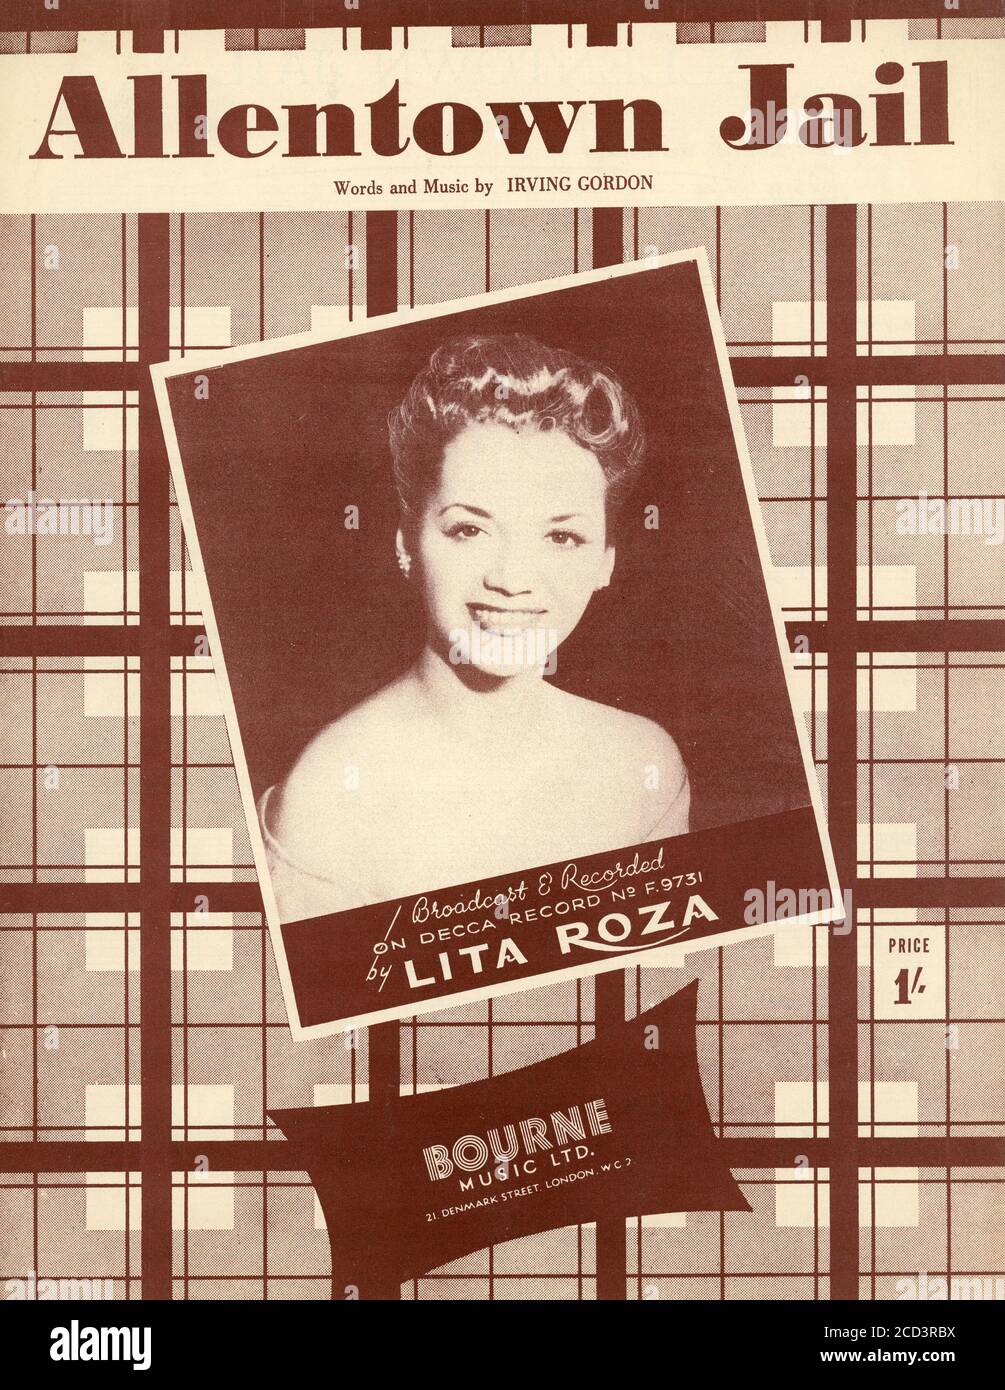 Sheet Music - Allentown Jail - Lita Roza - 1951 Stock Photo